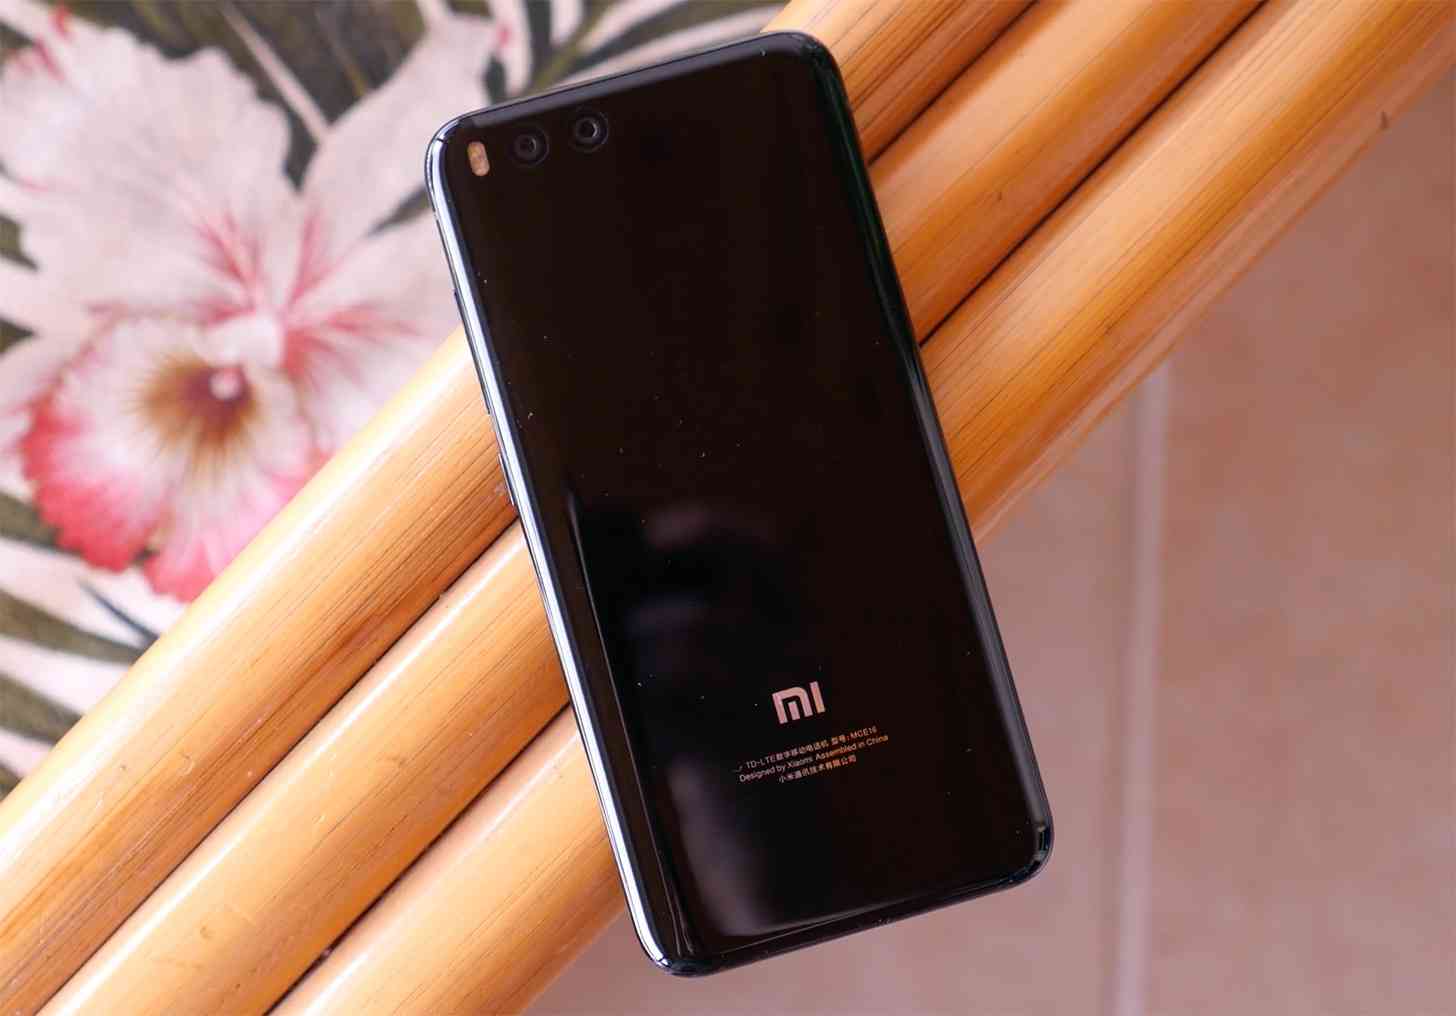 Xiaomi Mi 6 hands-on video review